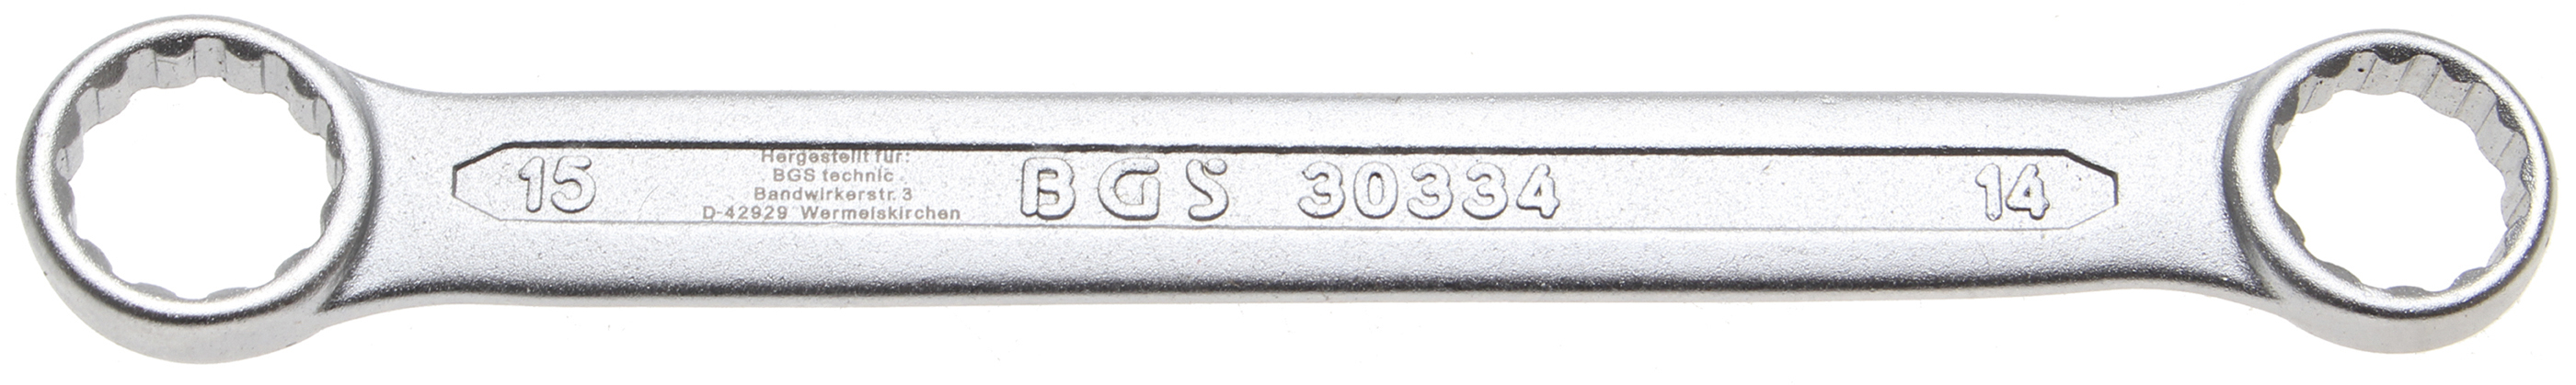 BGS 30334 Cheie inelara,extra plata, 14 x 15 mm